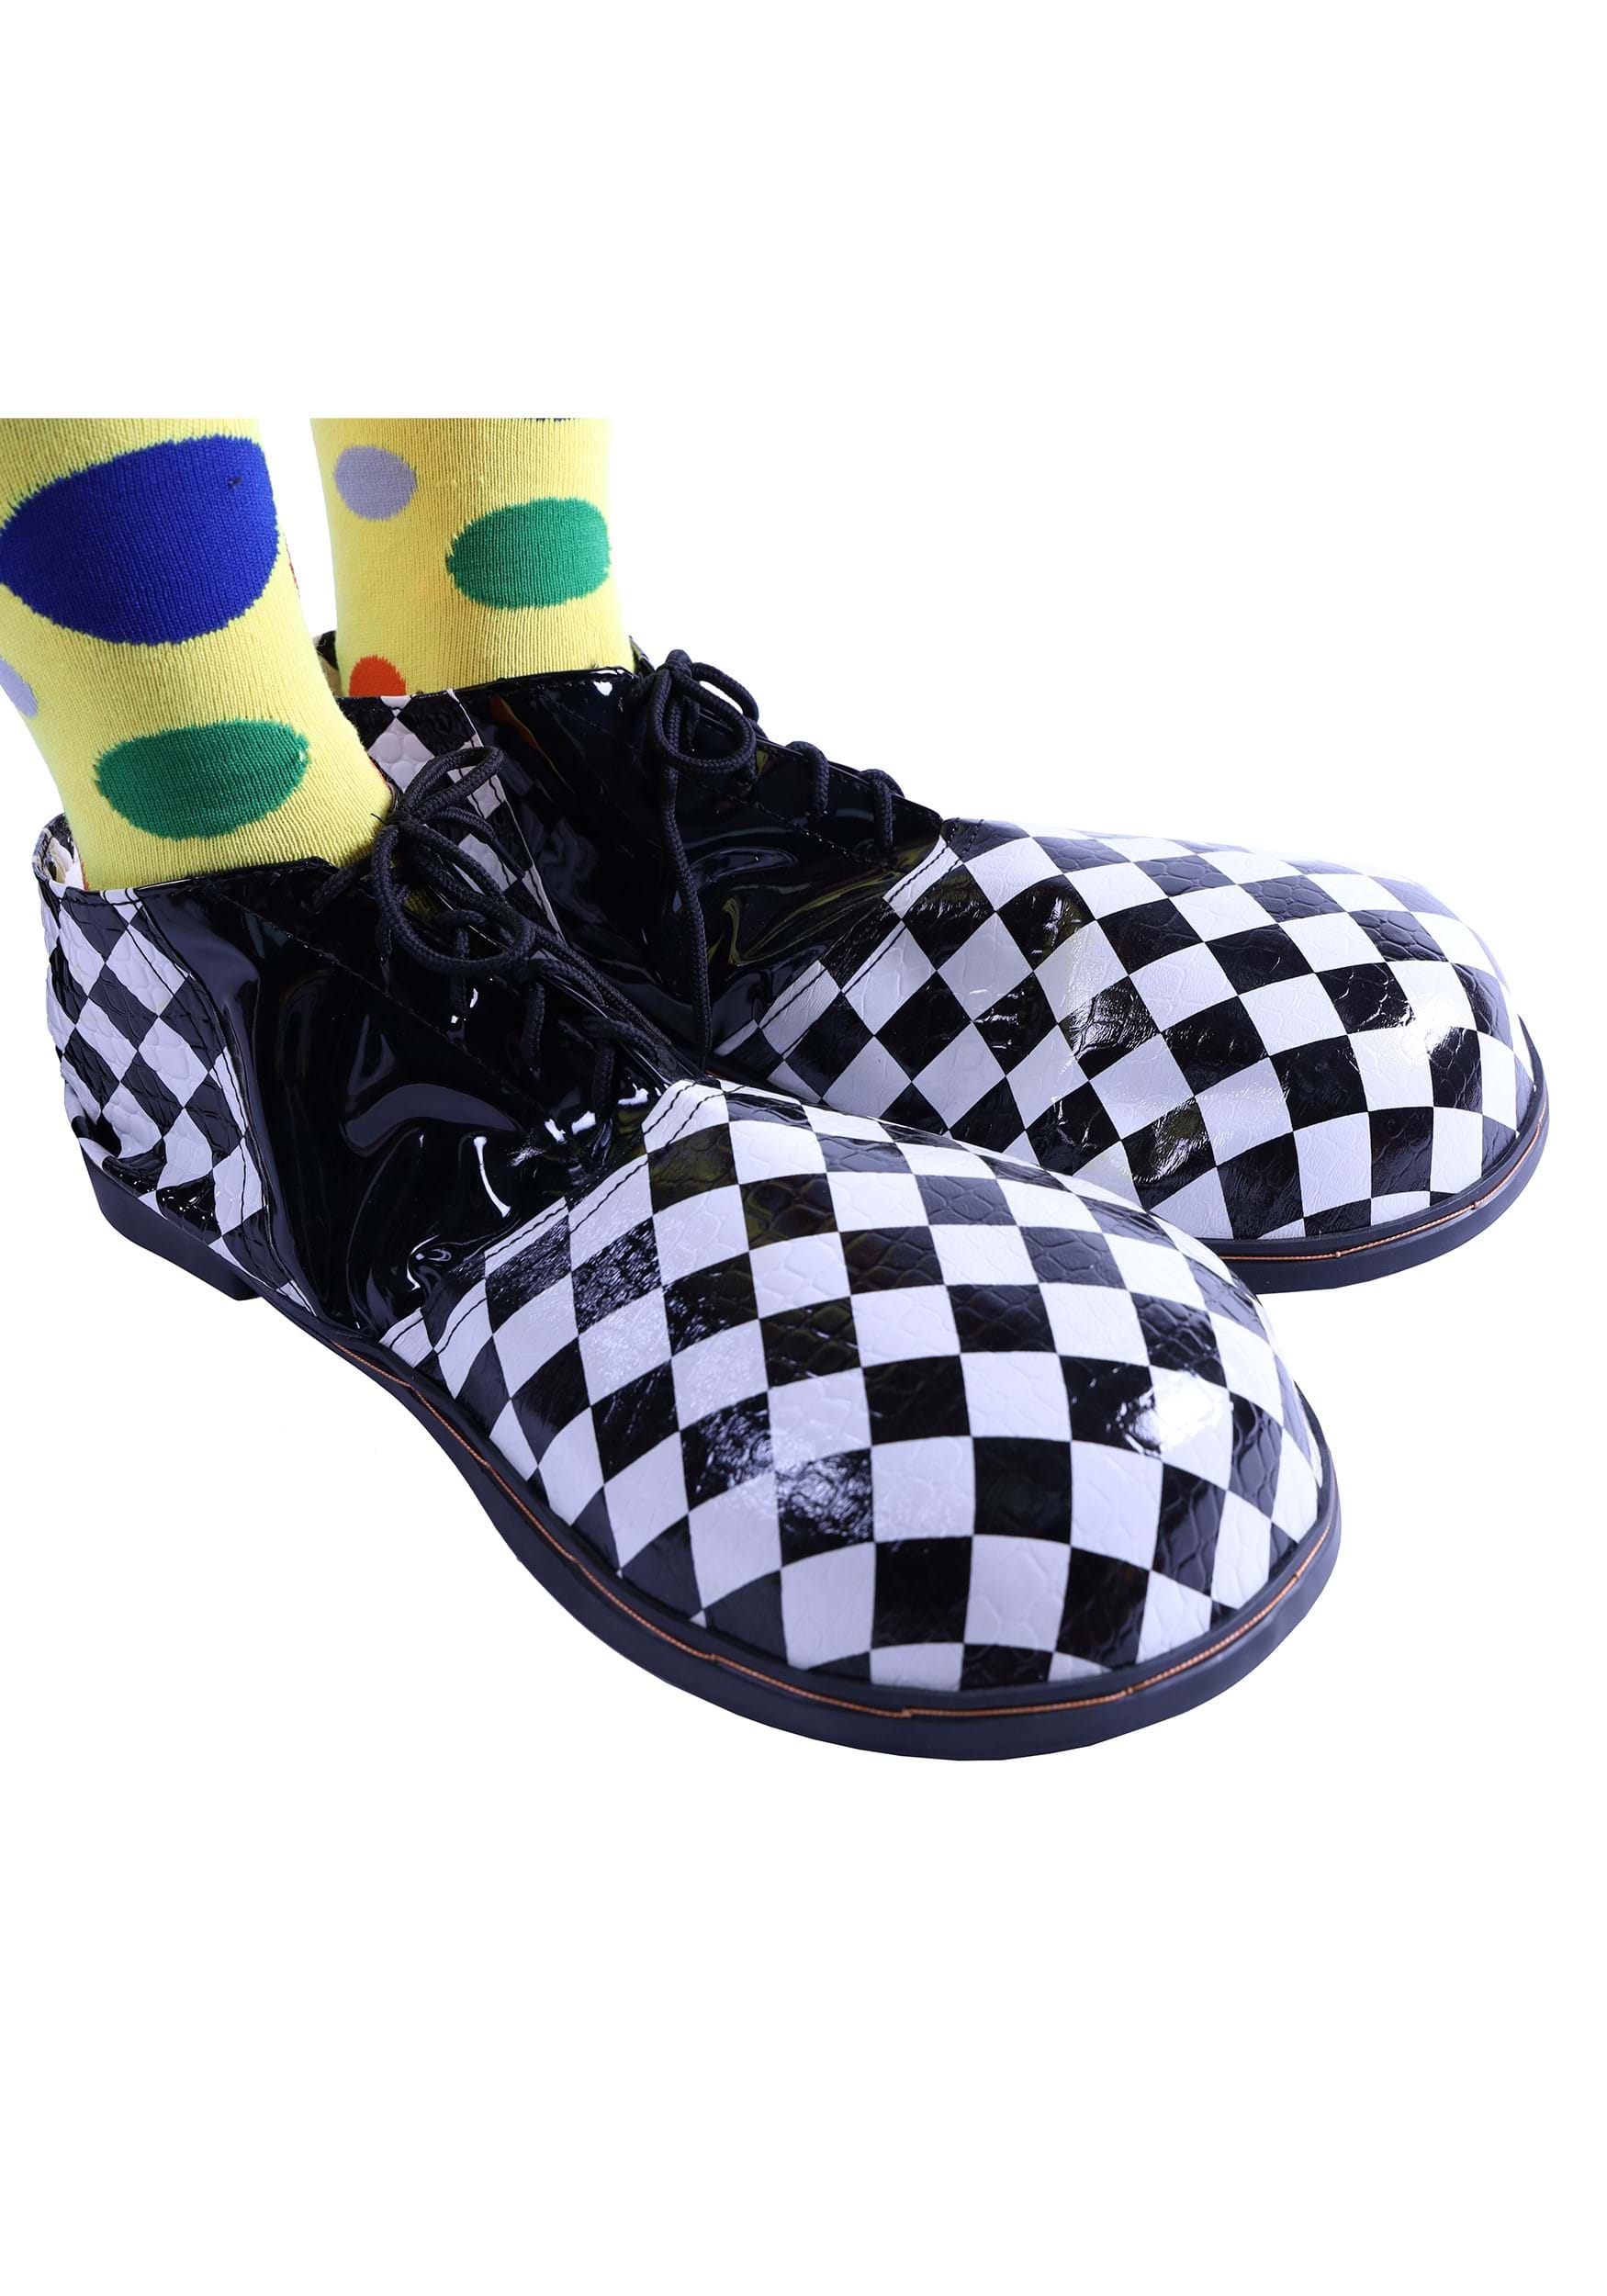 Checkered Jumbo Shoe for a Clown